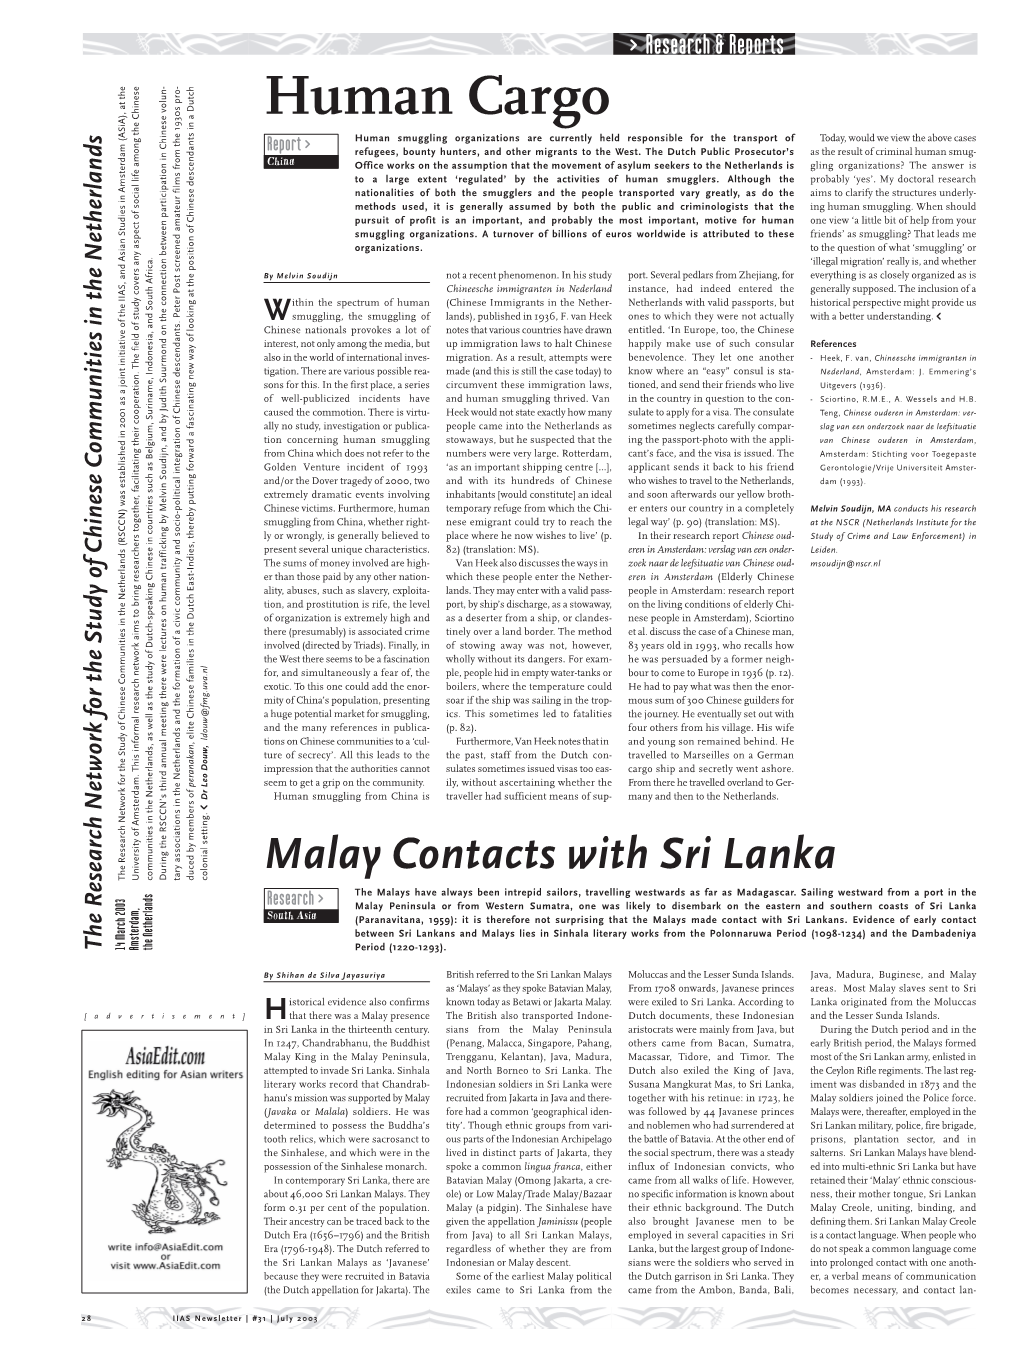 Malay Contacts with Sri Lanka